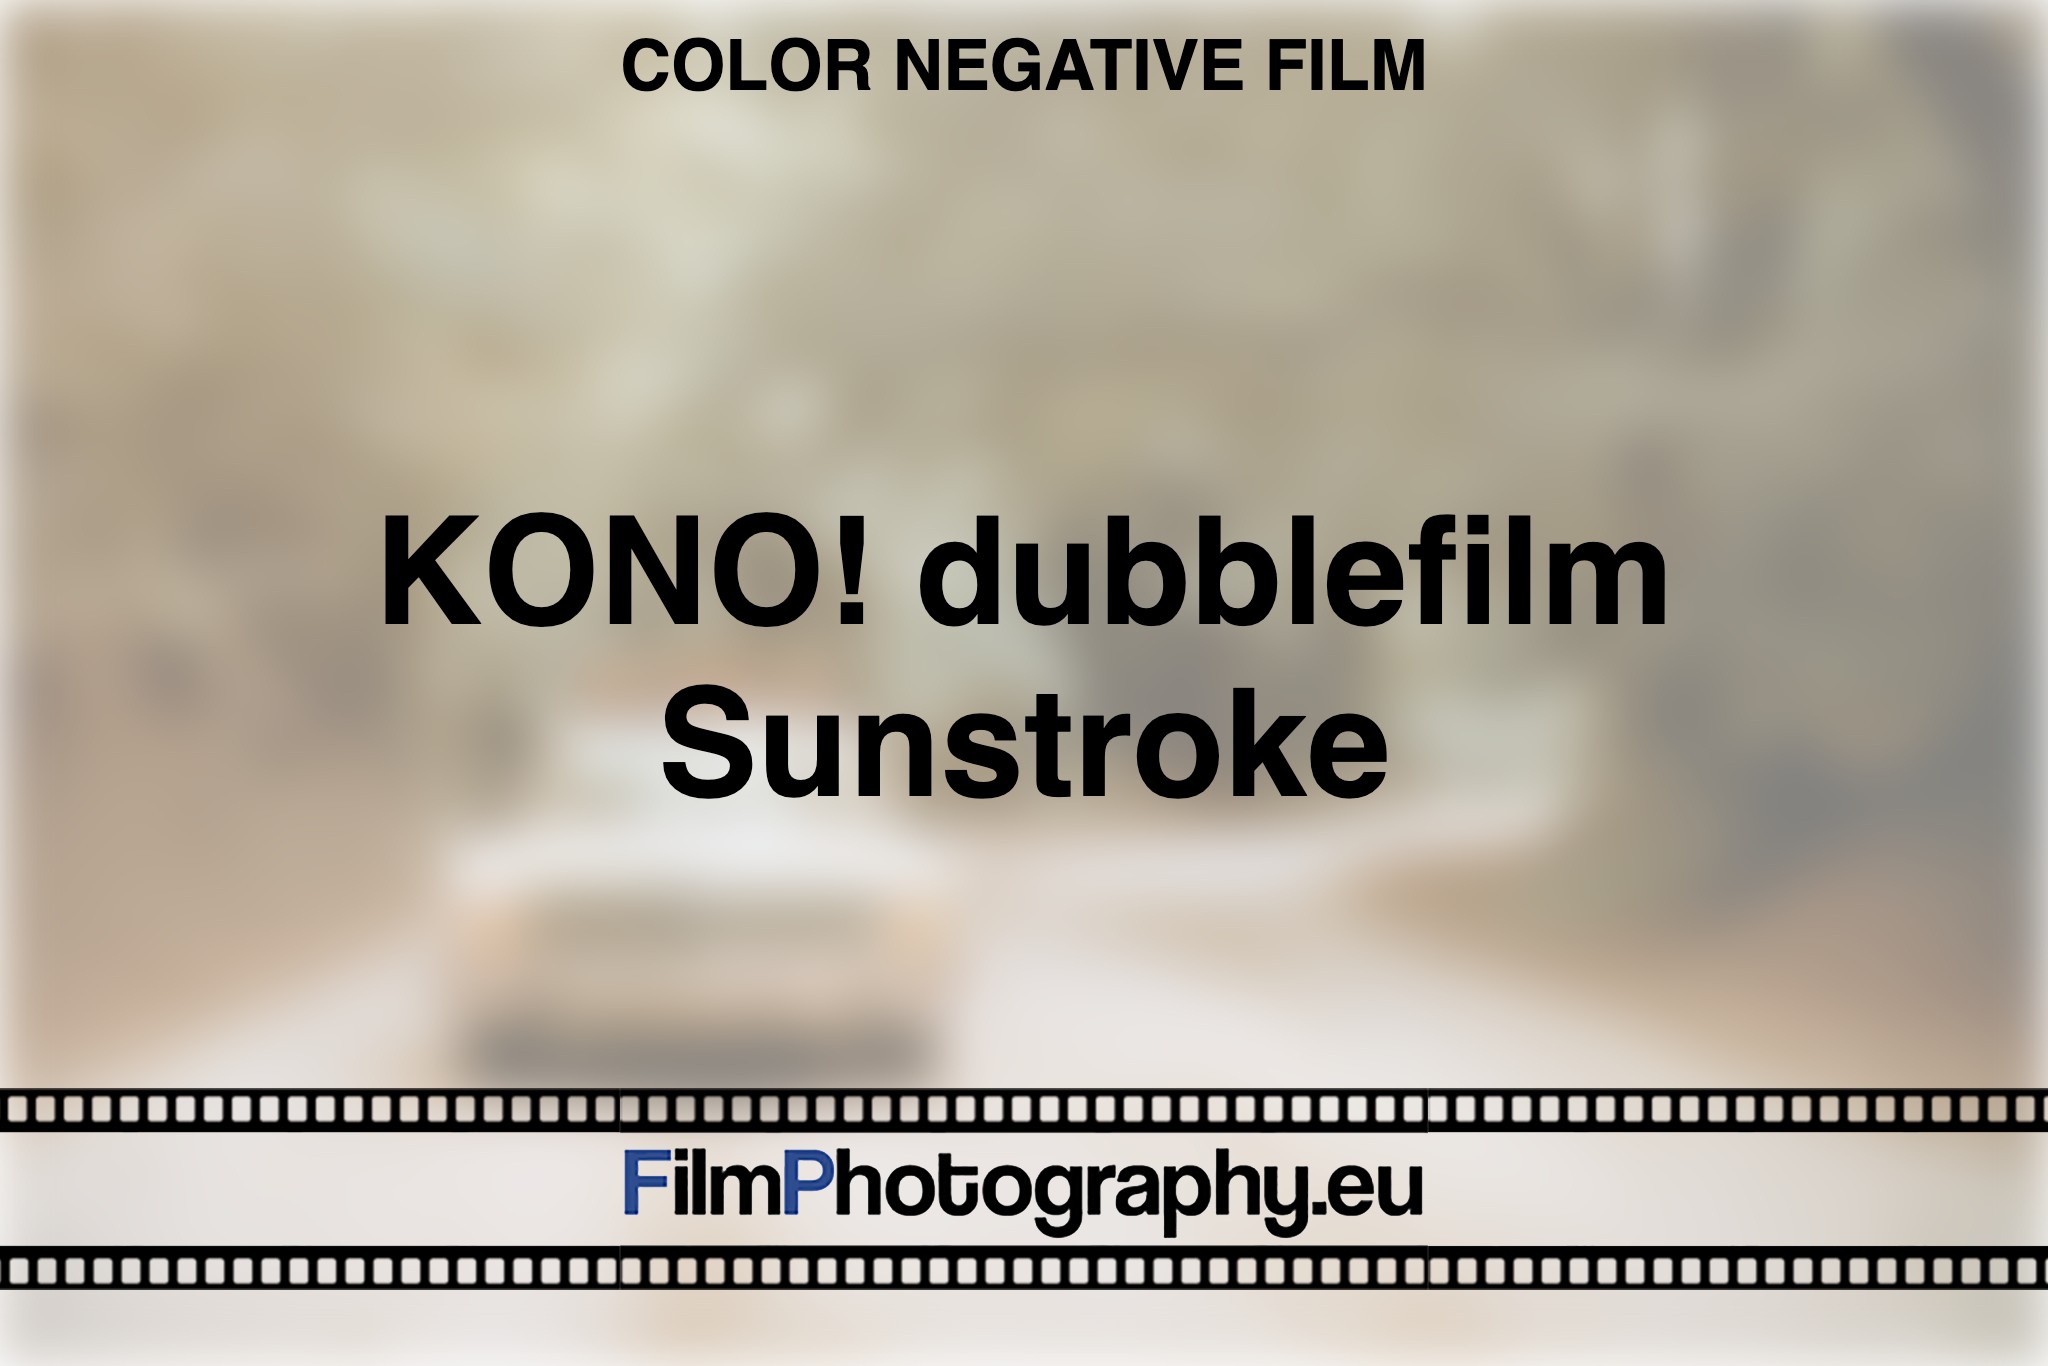 kono-dubblefilm-sunstroke-color-negative-film-bnv